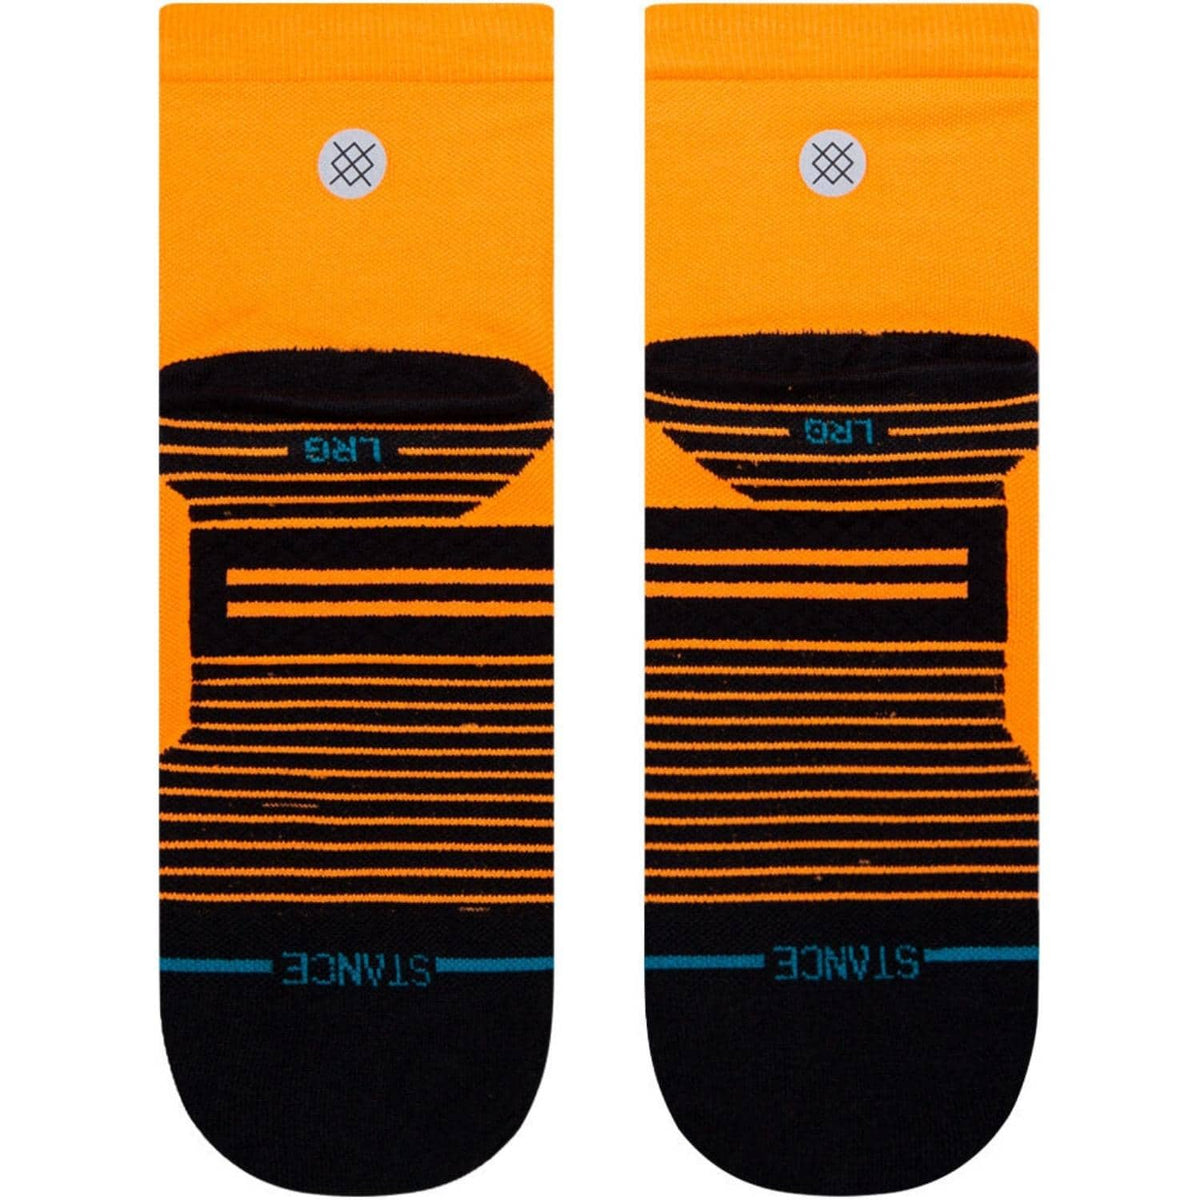 Stance Hiatus QTR Quarter Performance Socks - Neon Orange - Unisex Running/Training Socks by Stance